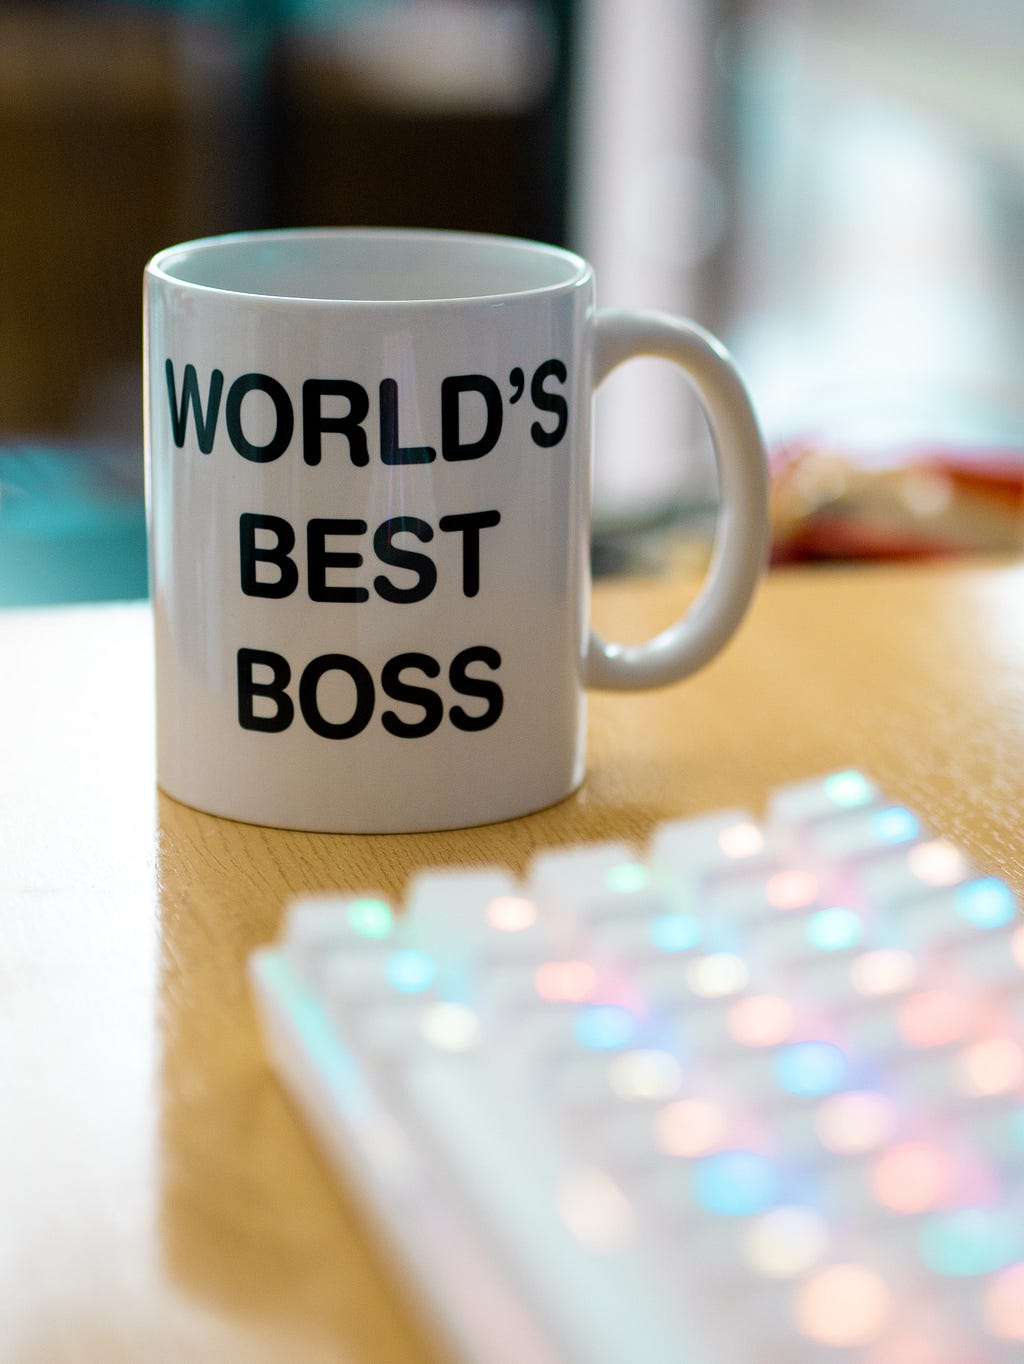 Coffee mug next to computer keyboard that says “World’s Best Boss”